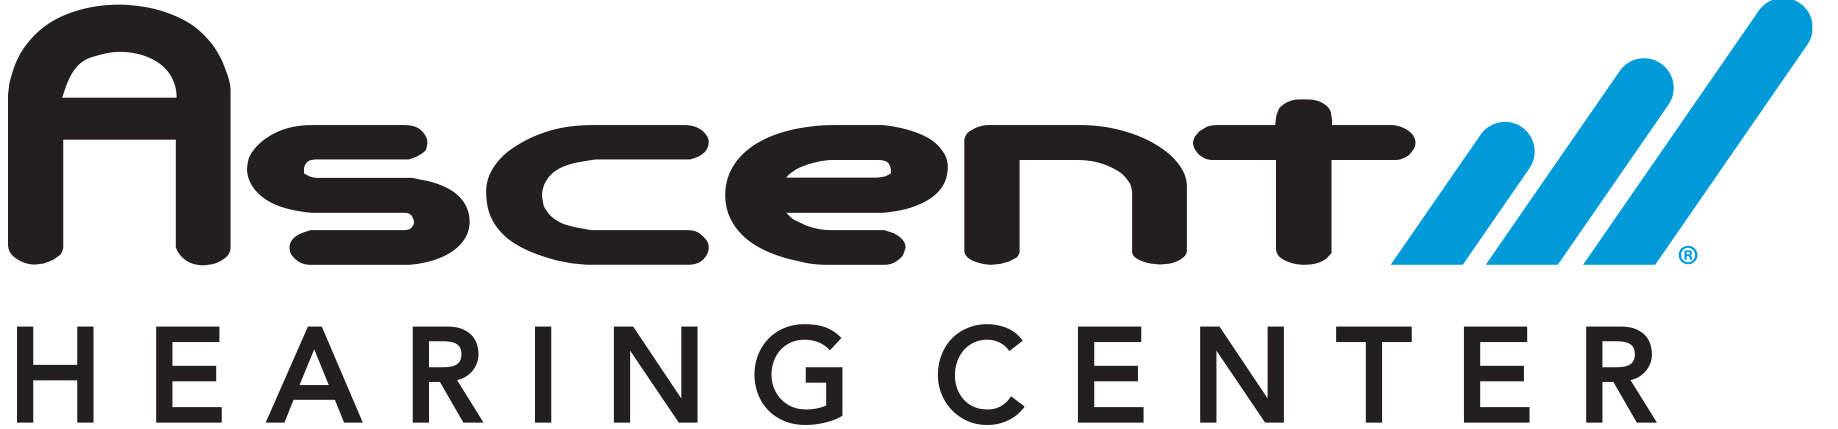 Ascent Hearing Center Logo